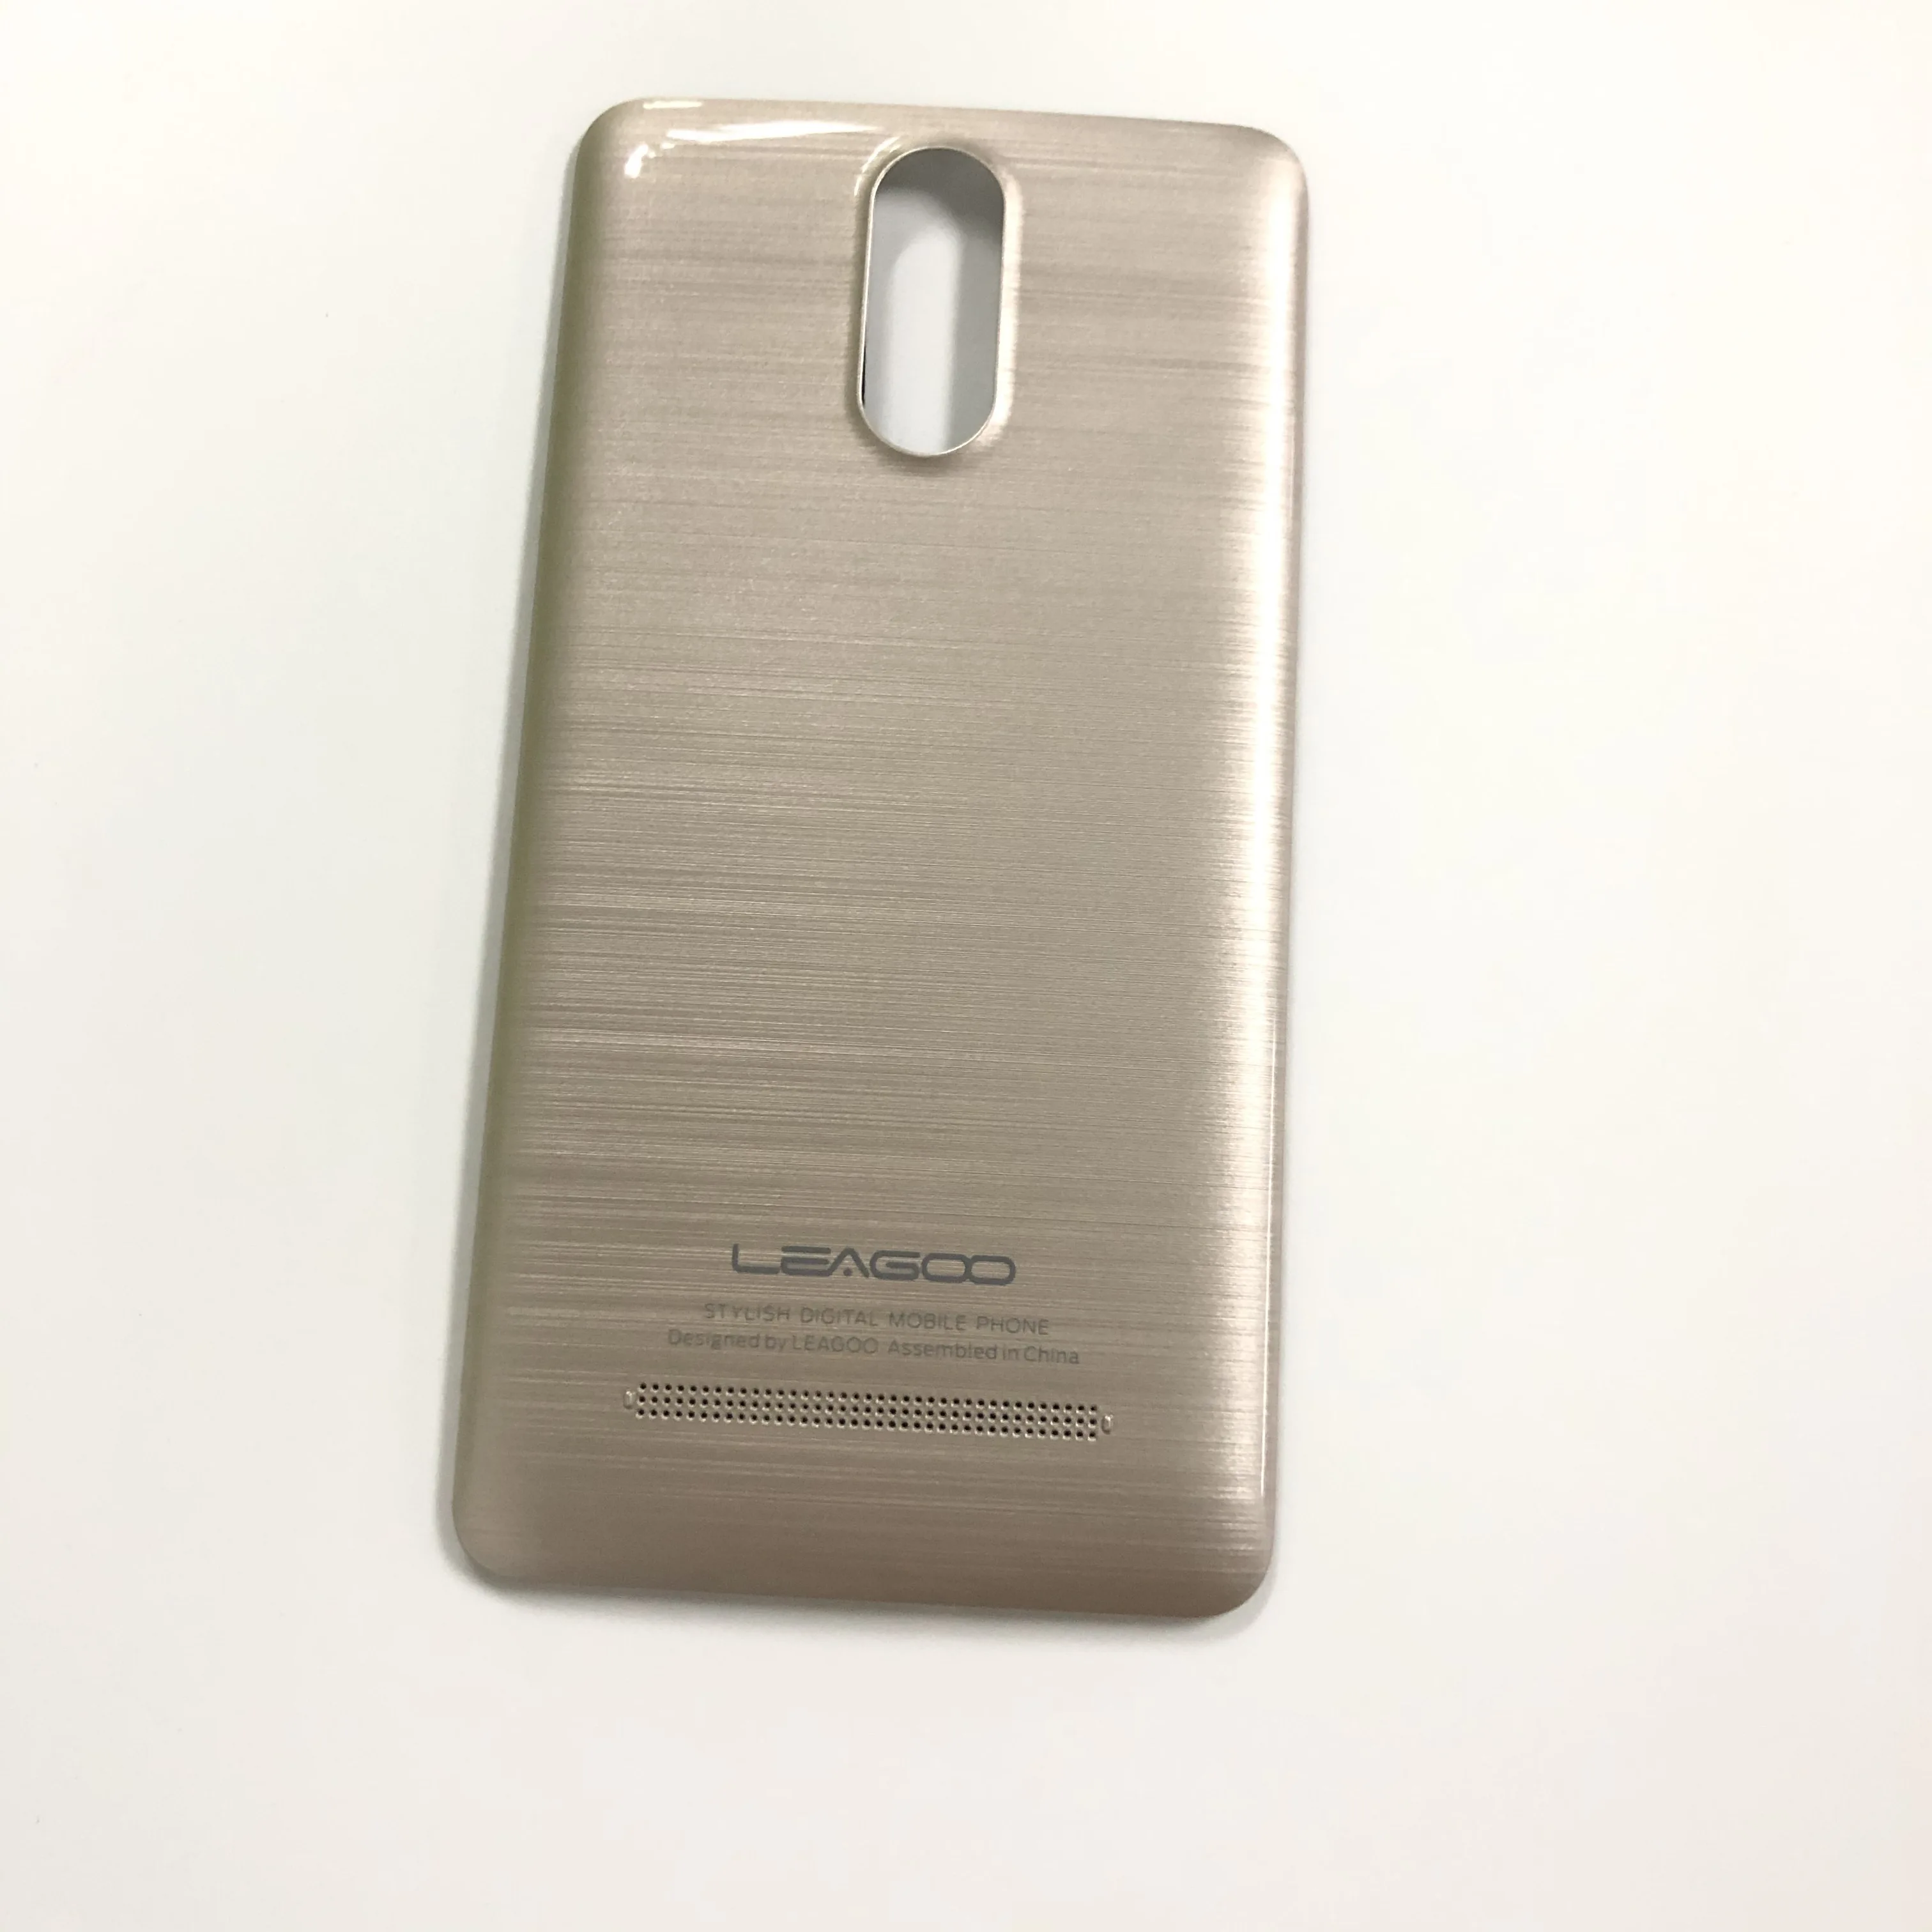 Чехол-накладка для смартфона Leagoo M8 б/у защитный чехол аккумулятора | Мобильные